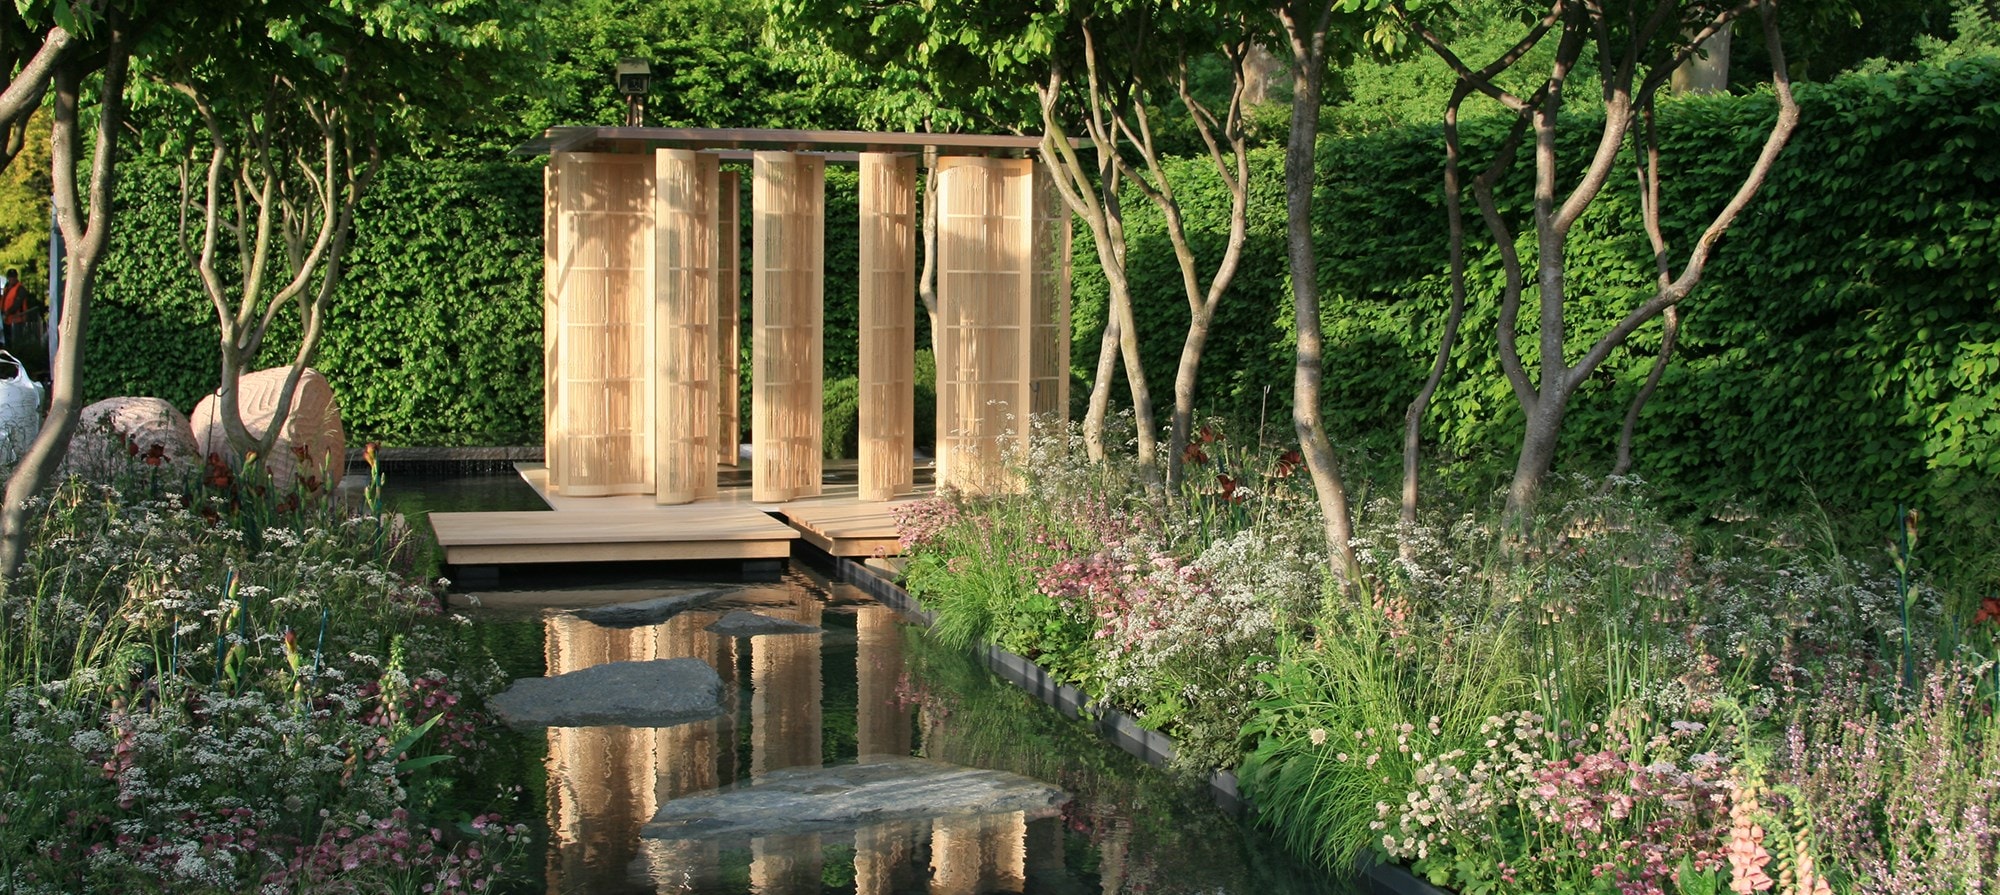 The Laurent-Perrier Garden designed by Luciano Giubbilei